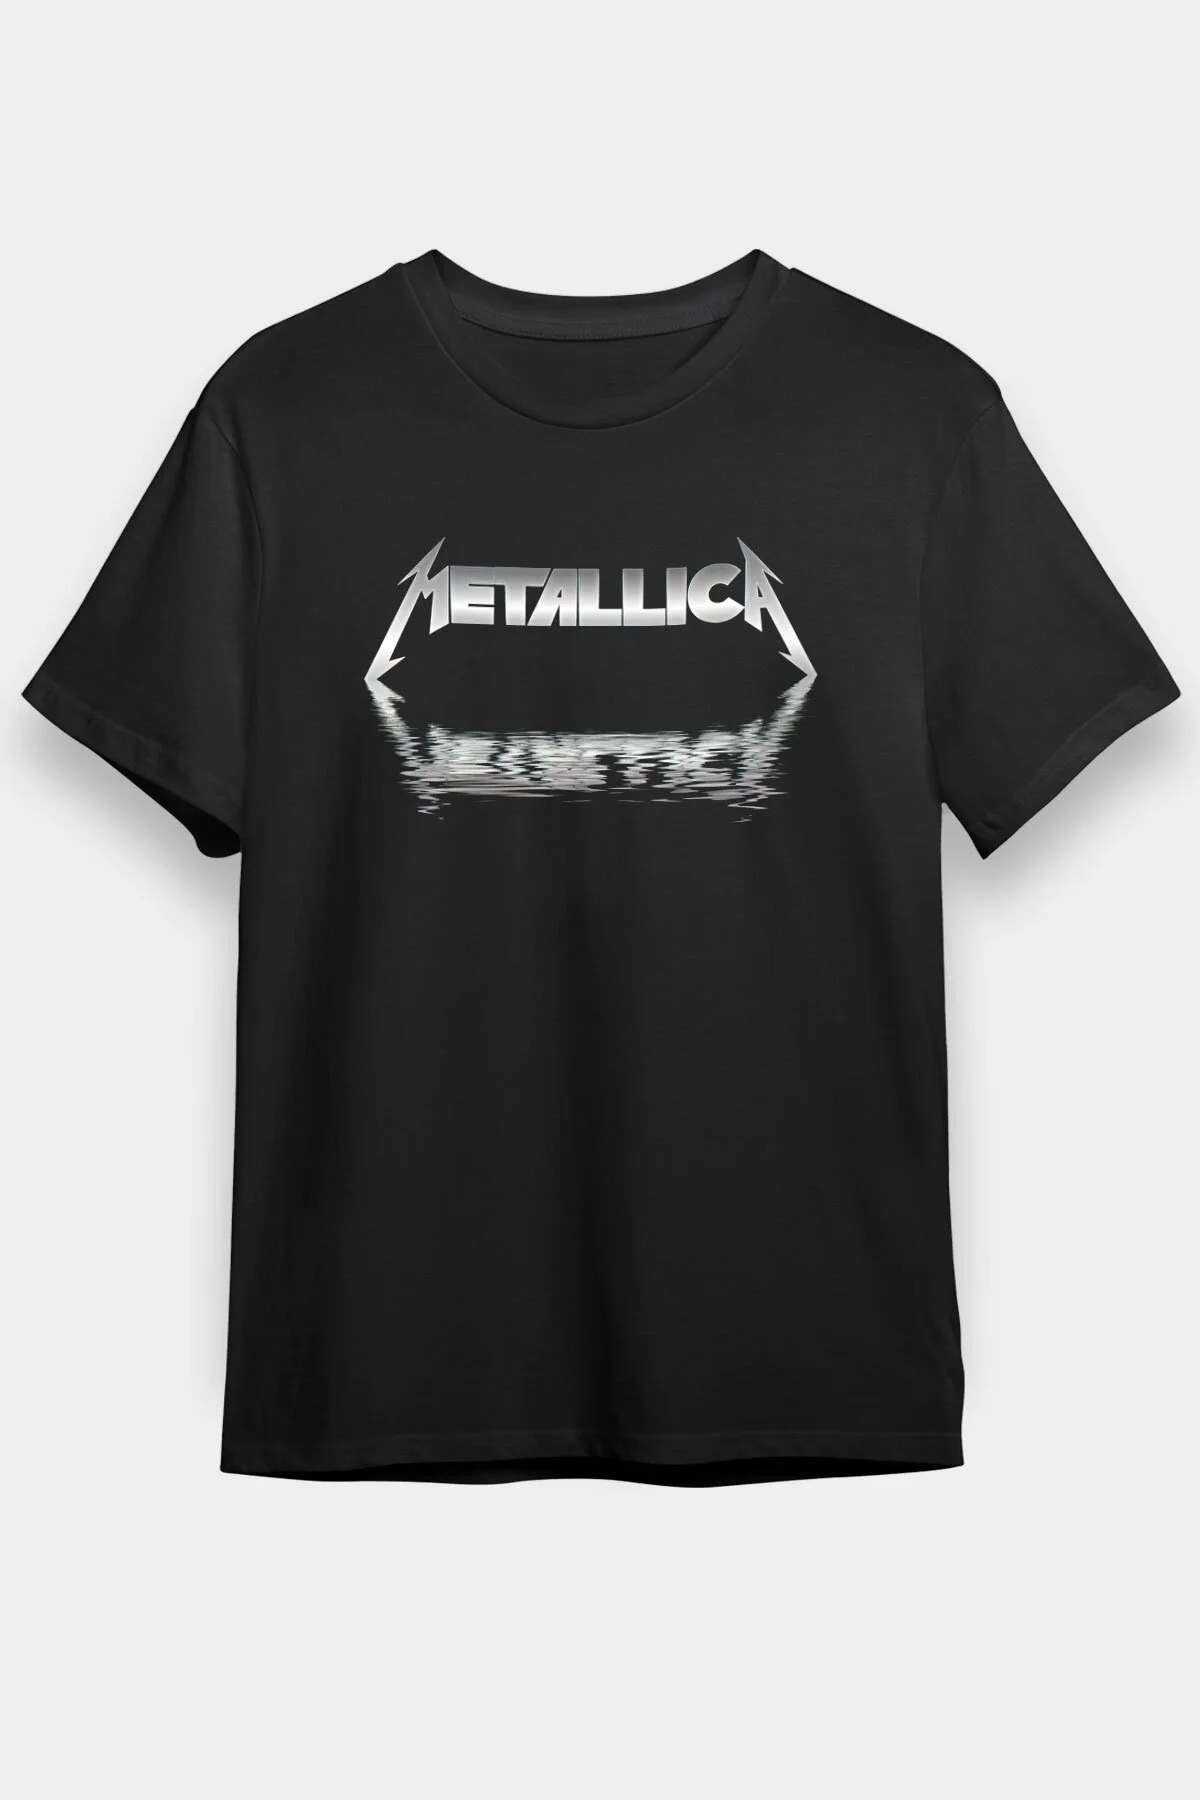 Metallica T shirt, Music Band ,Unisex Tshirt 19/